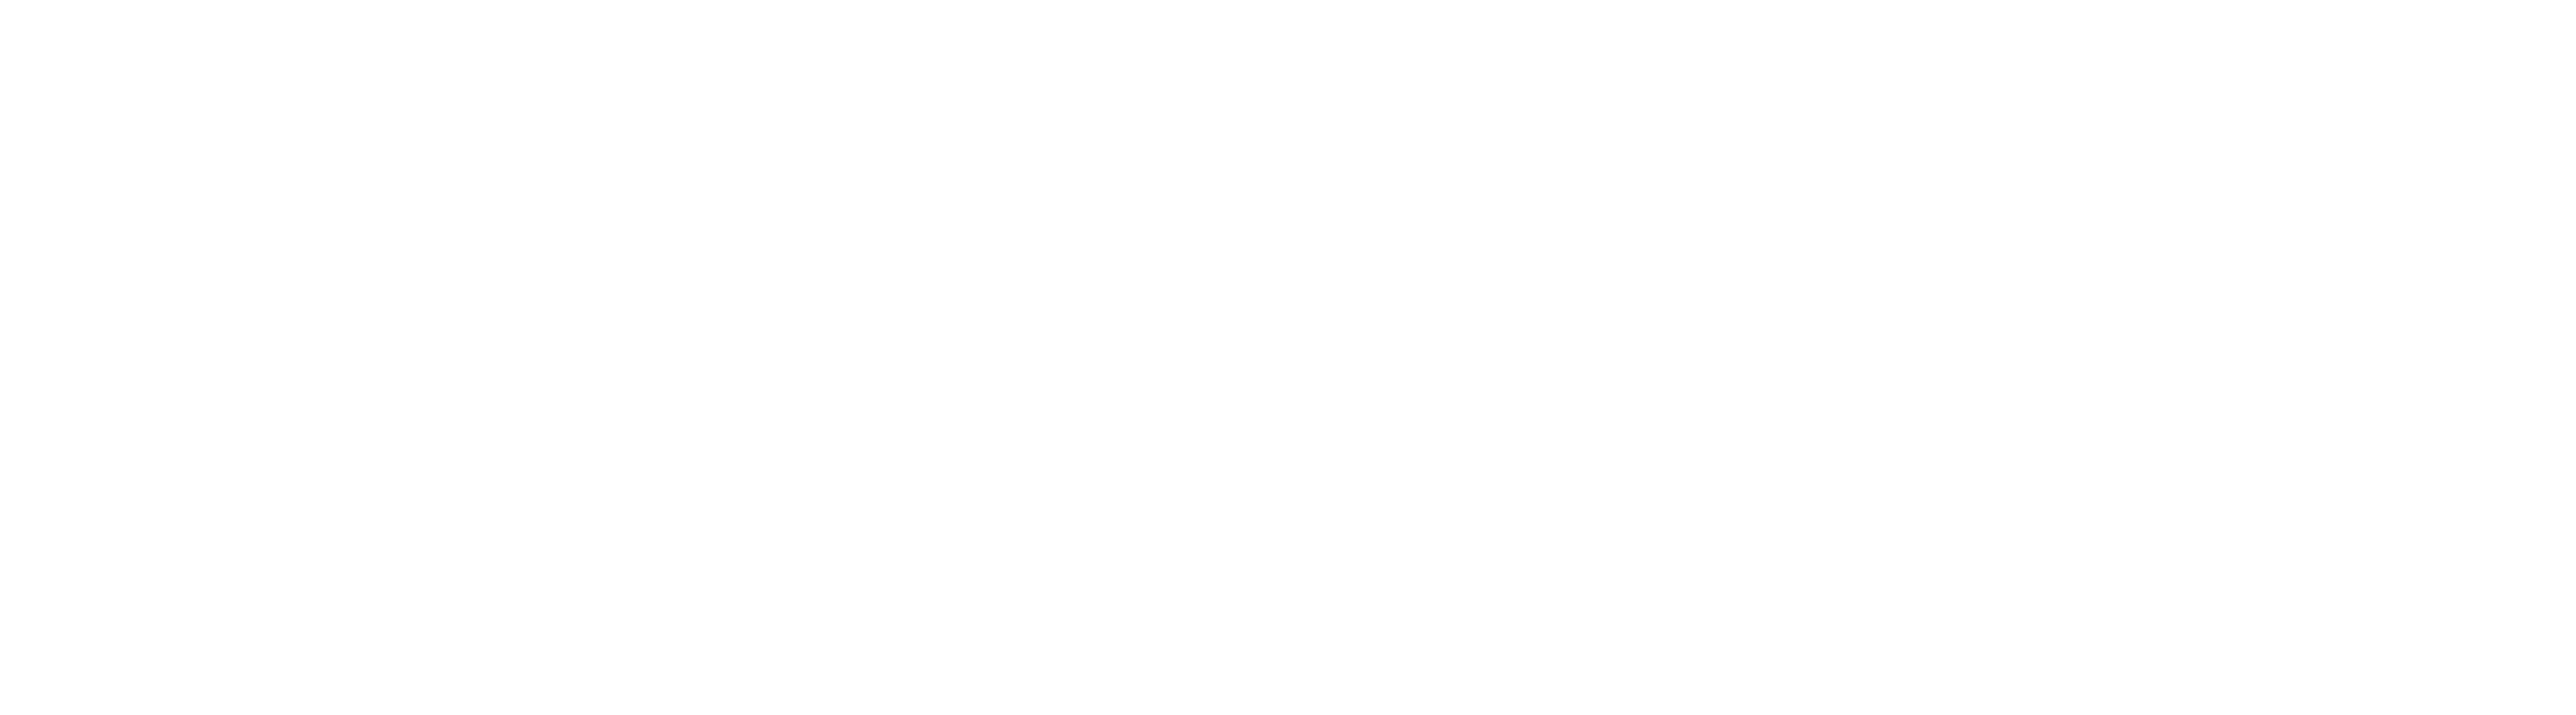 Crank: High Voltage logo